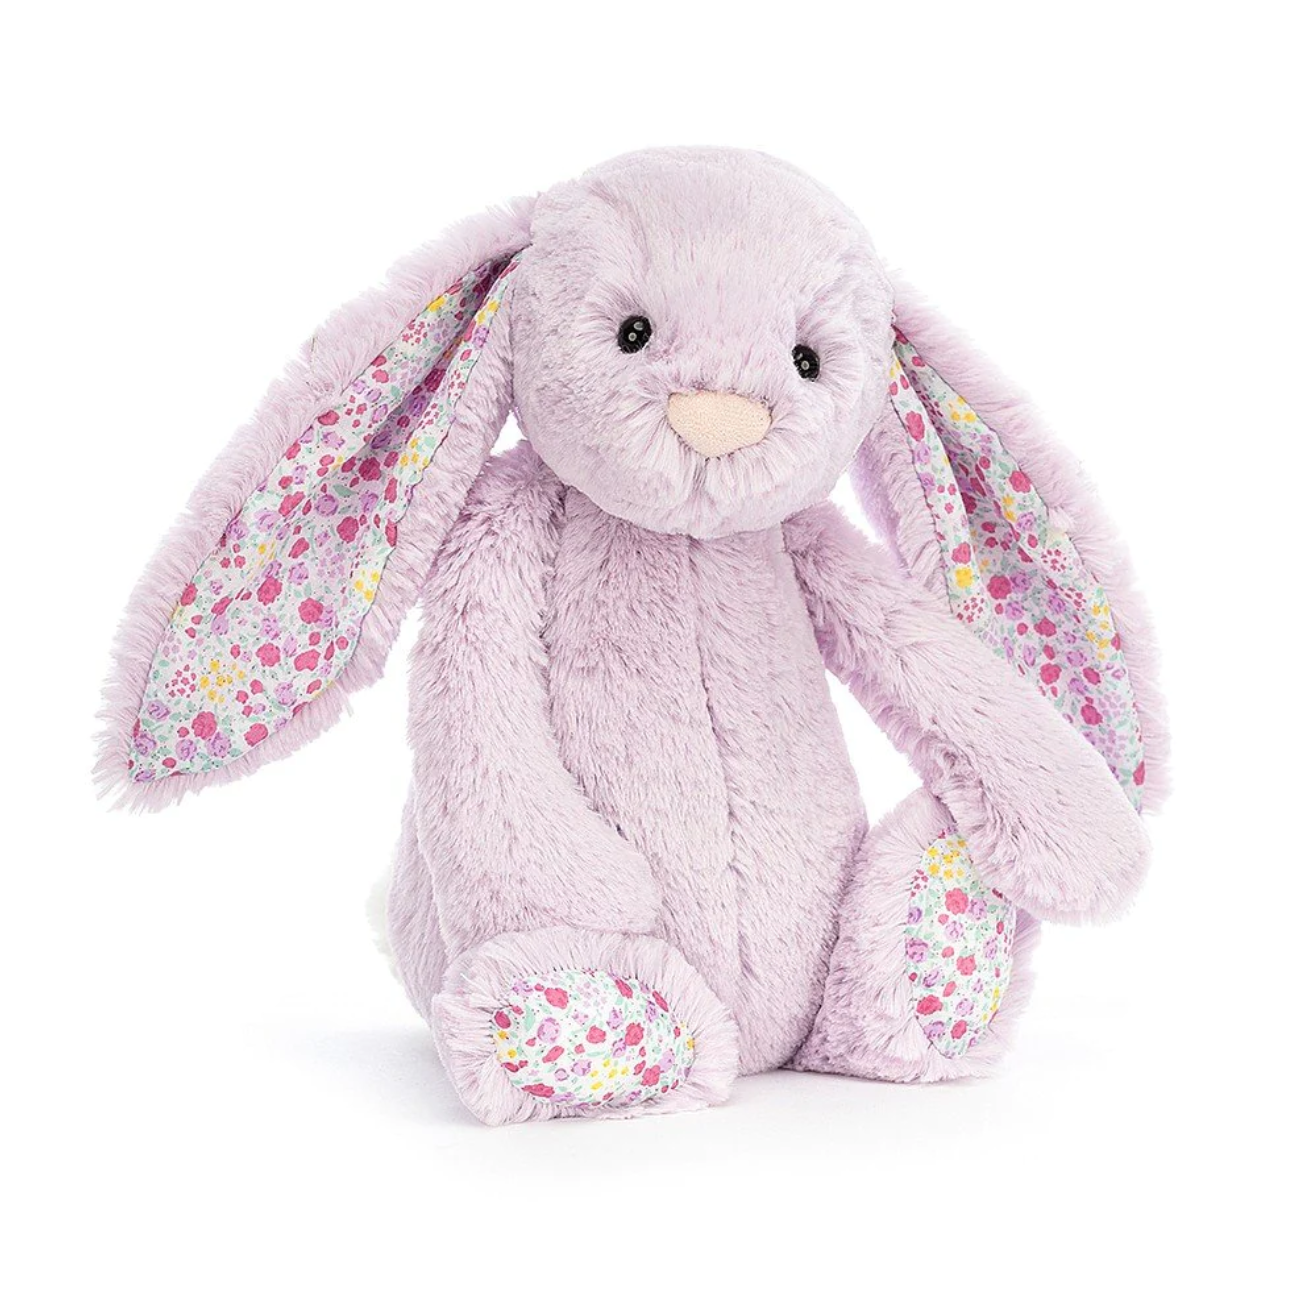 Jellycat Bashful Bunny Medium Soft Toys in Jasmine Lilac at Wrapsody